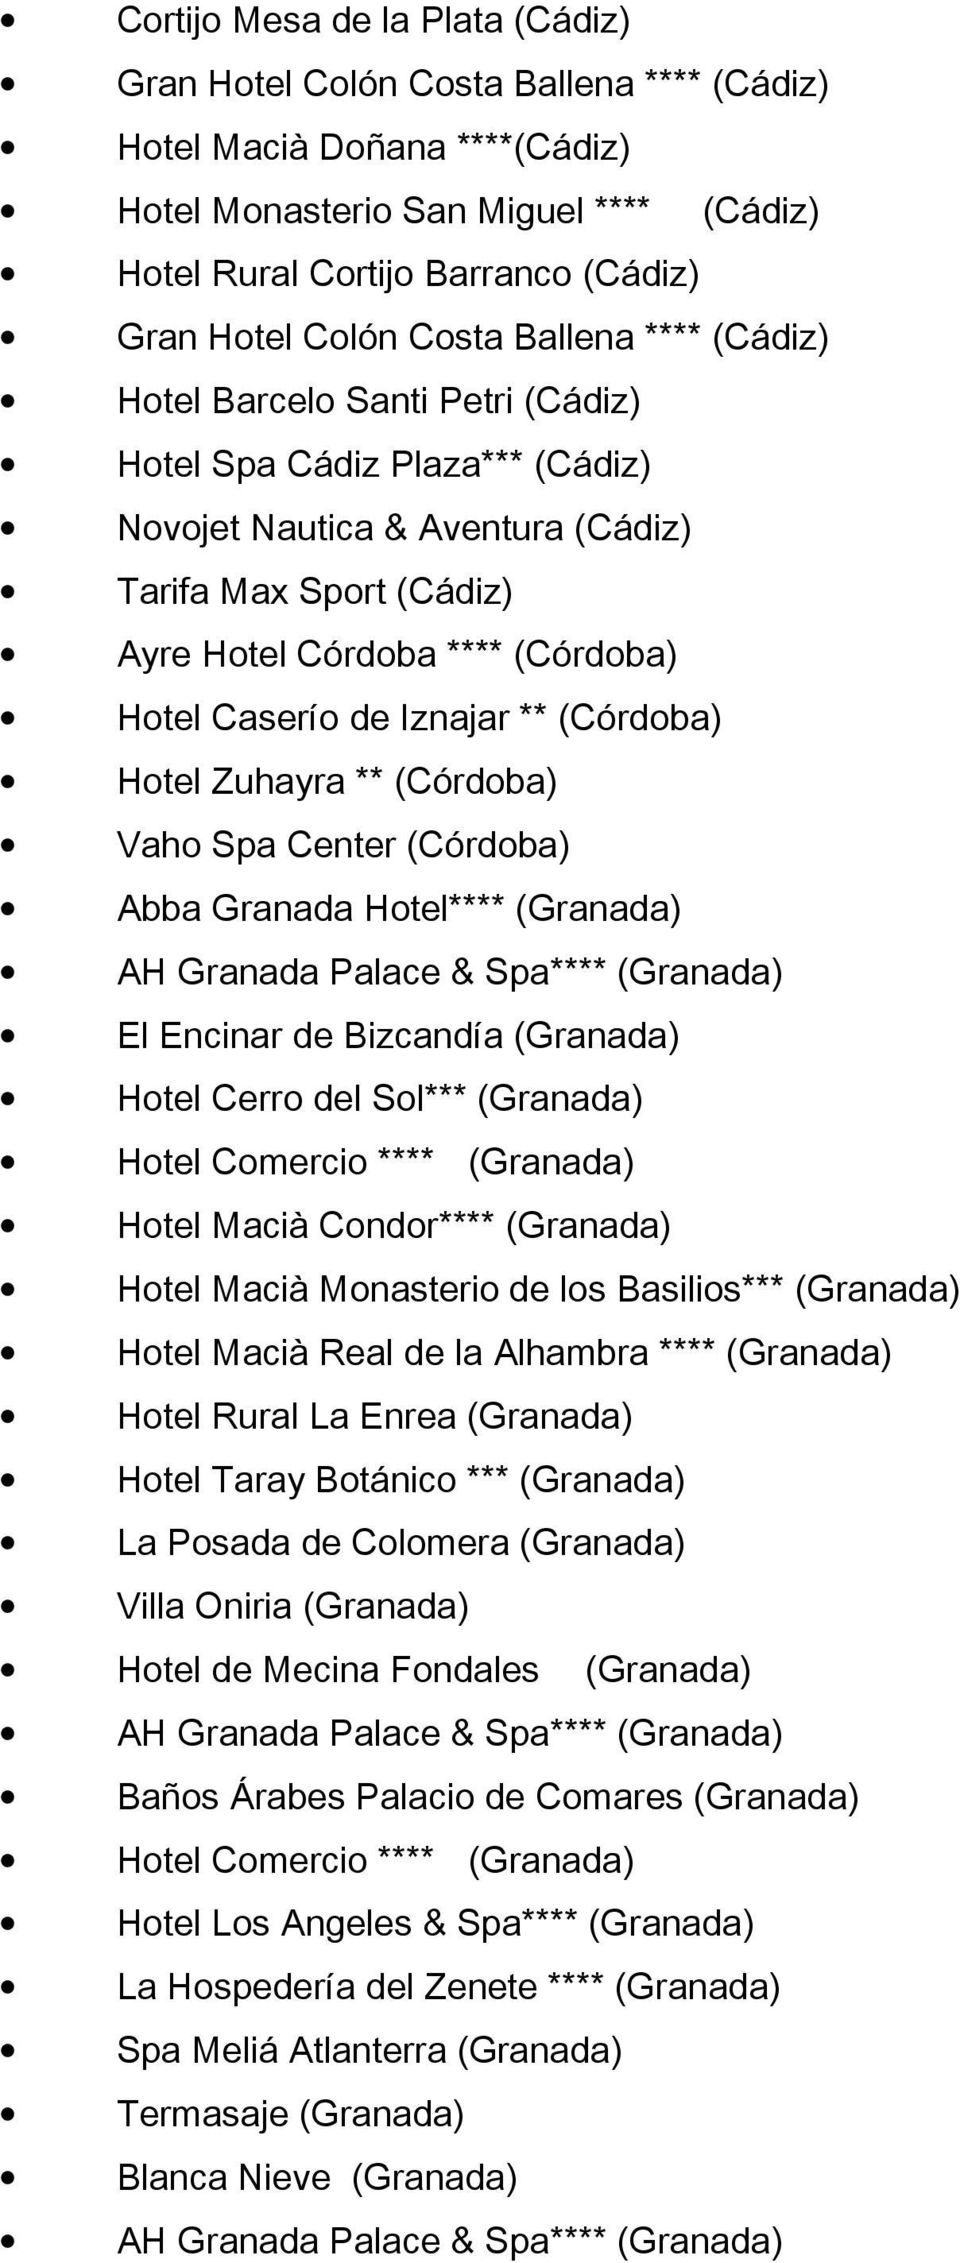 Caserío de Iznajar ** (Córdoba) Hotel Zuhayra ** (Córdoba) Vaho Spa Center (Córdoba) Abba Granada Hotel**** (Granada) AH Granada Palace & Spa**** (Granada) El Encinar de Bizcandía (Granada) Hotel